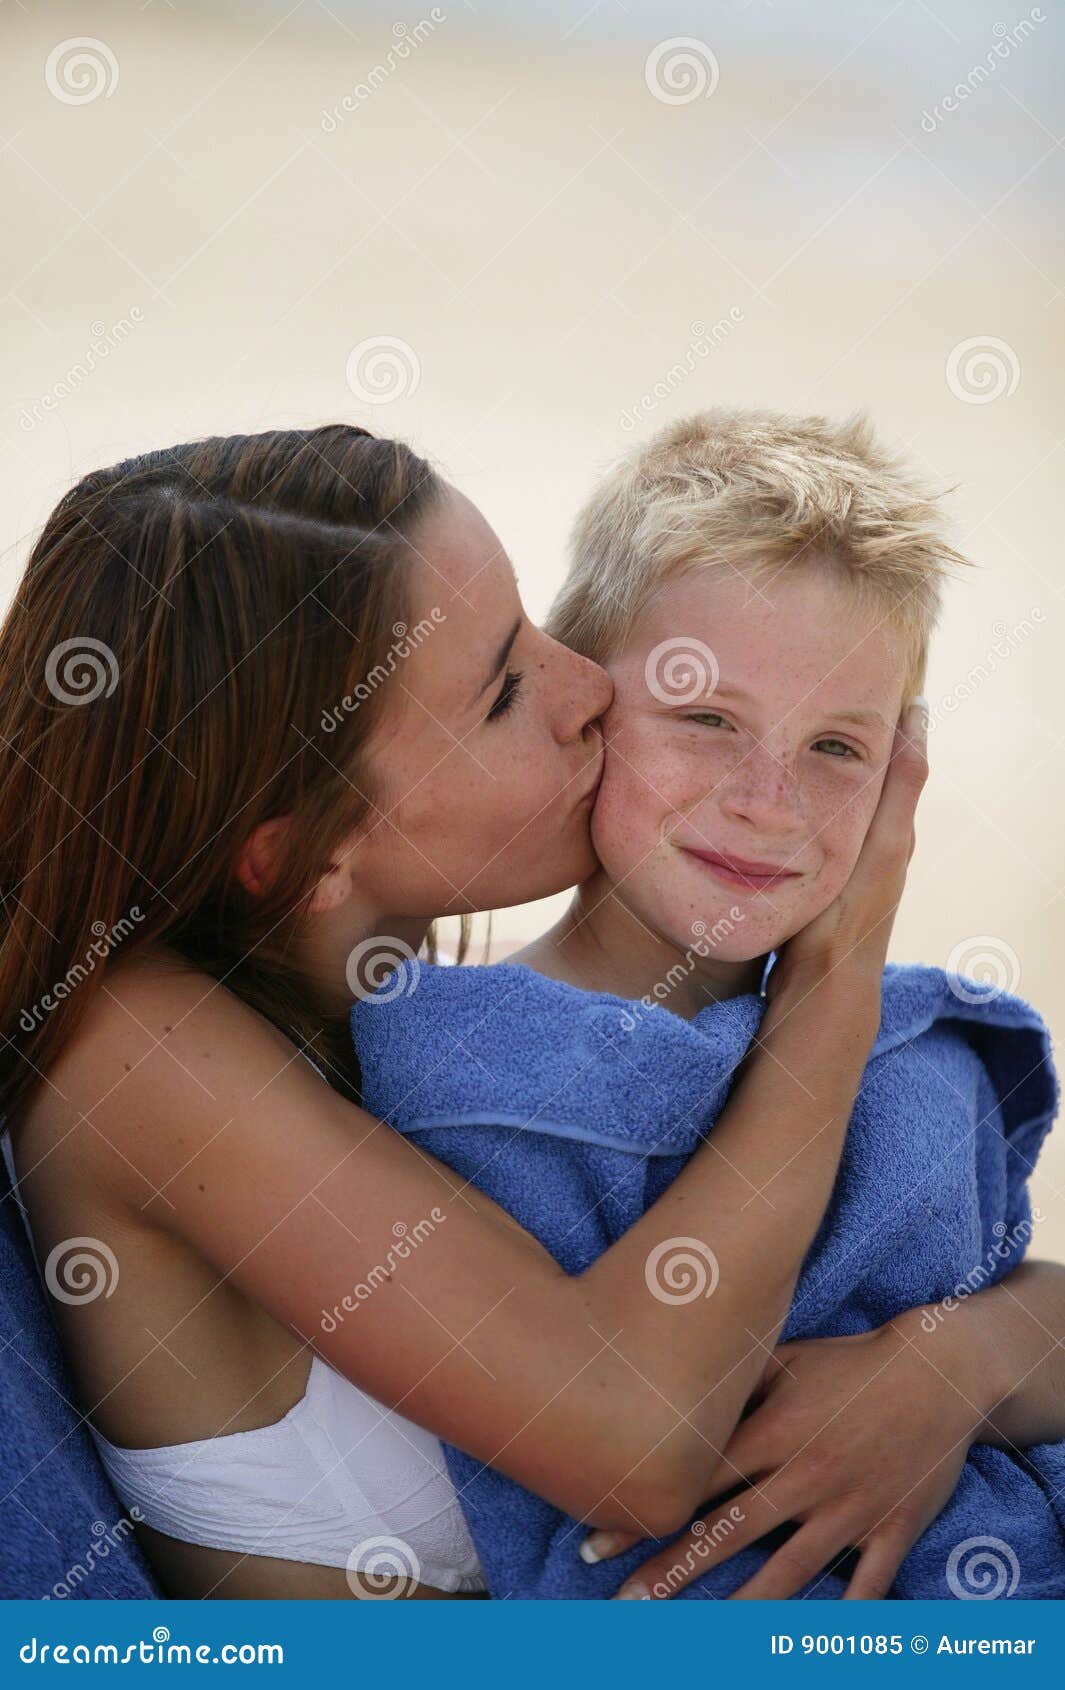 danielle dees recommends Woman Kiss A Boy